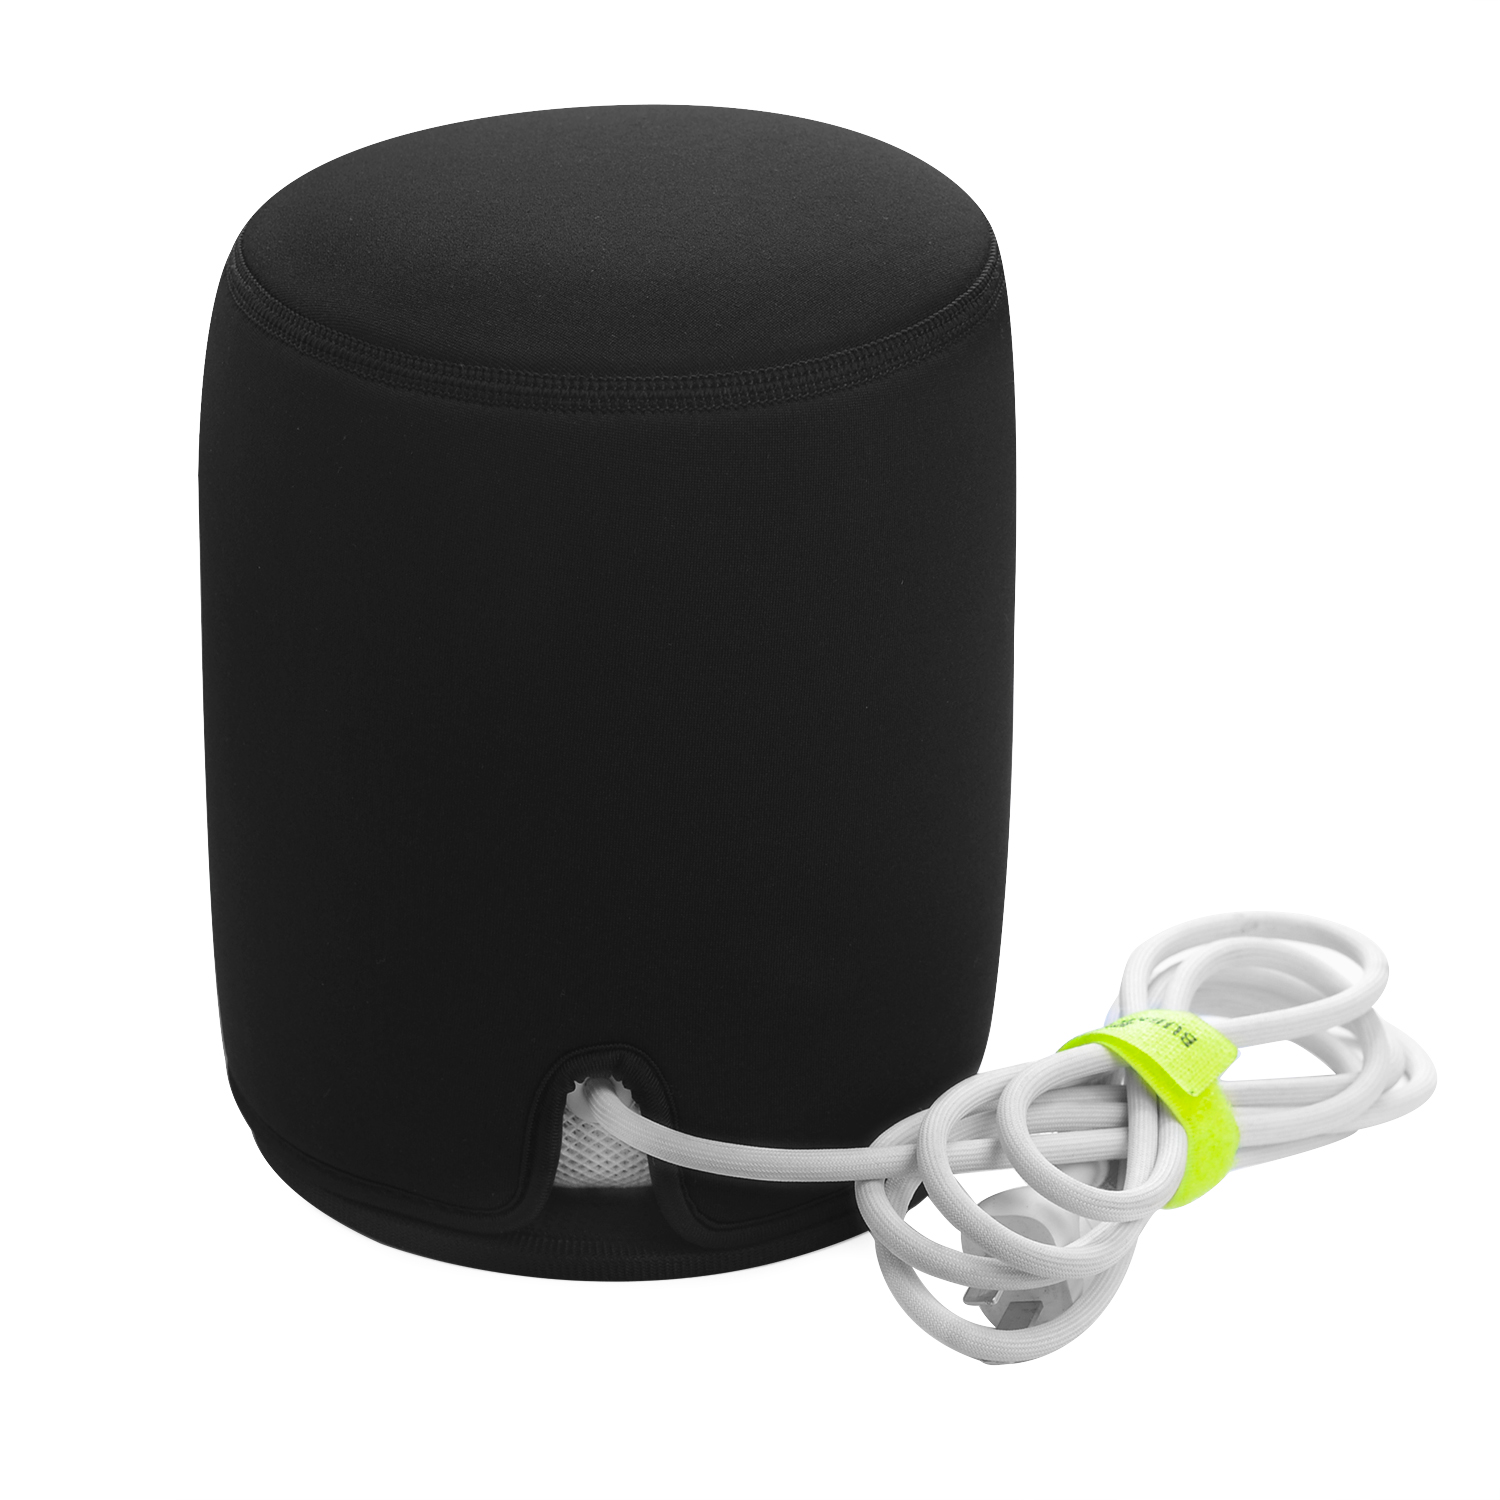 Bakeey Speaker Storage Cover Dustproof Protective Cover Case bluetooth Speaker Bag with Anti-Slip Mat for HomePod Smart Speaker